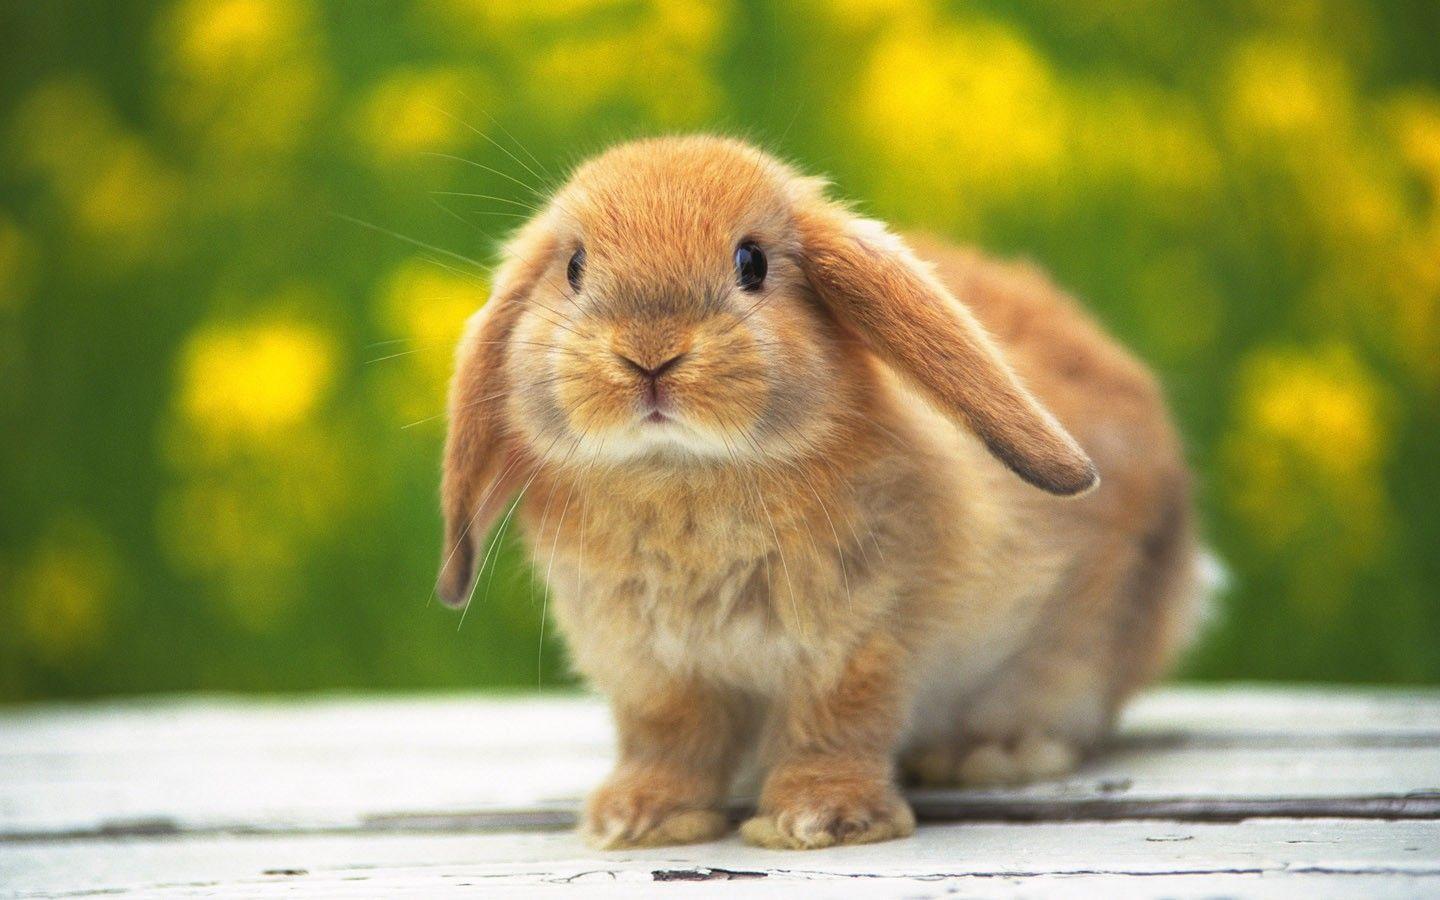 Animals For > Cute Rabbits Wallpaper For Desktop